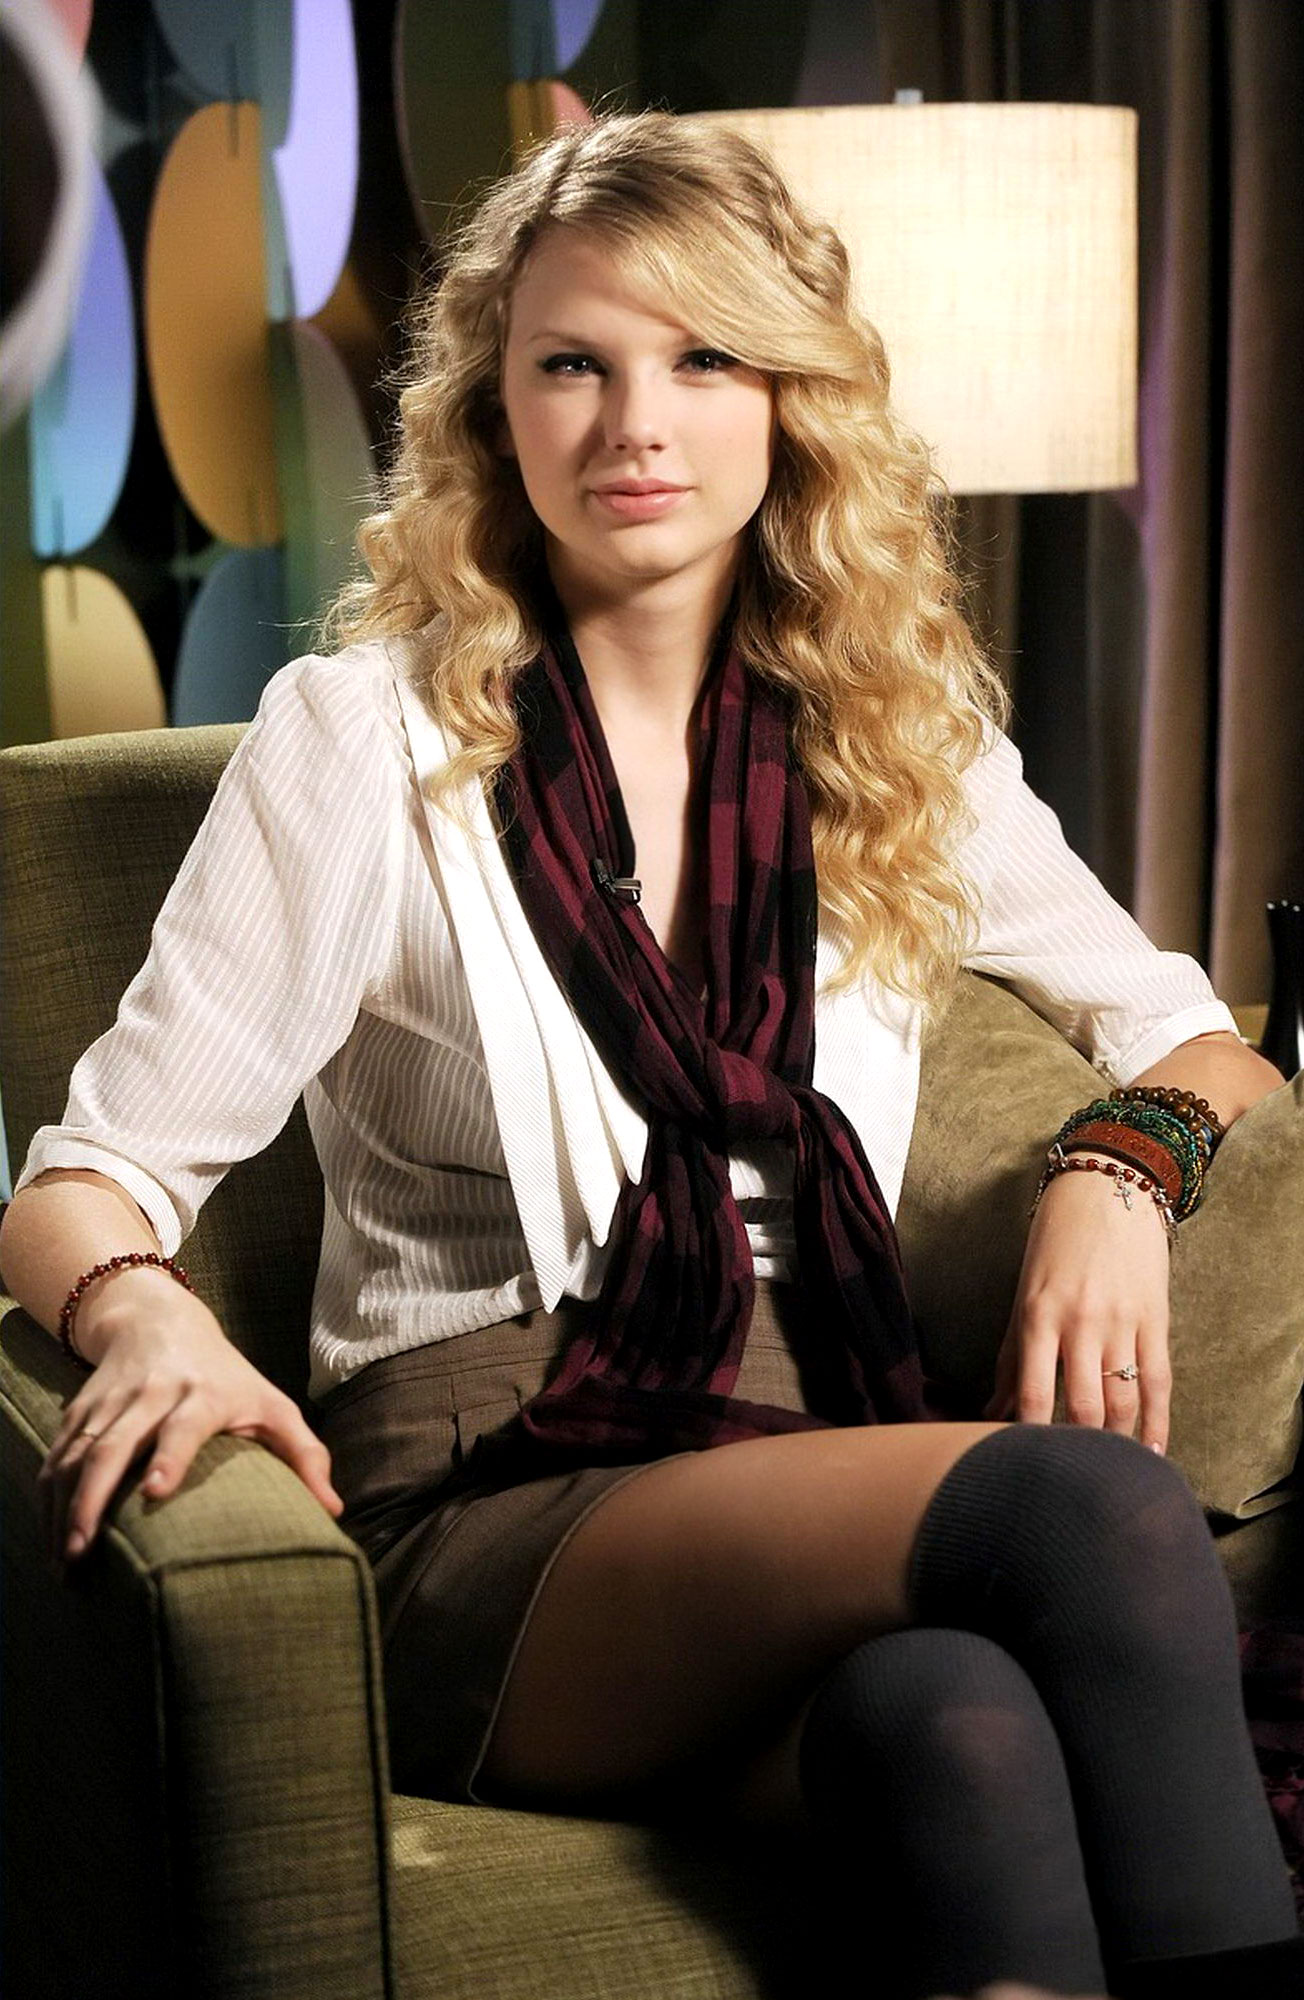 Celebrity Taylor Swift 壁紙画像 Pchdwallpaper Com Pchdwallpaper Com